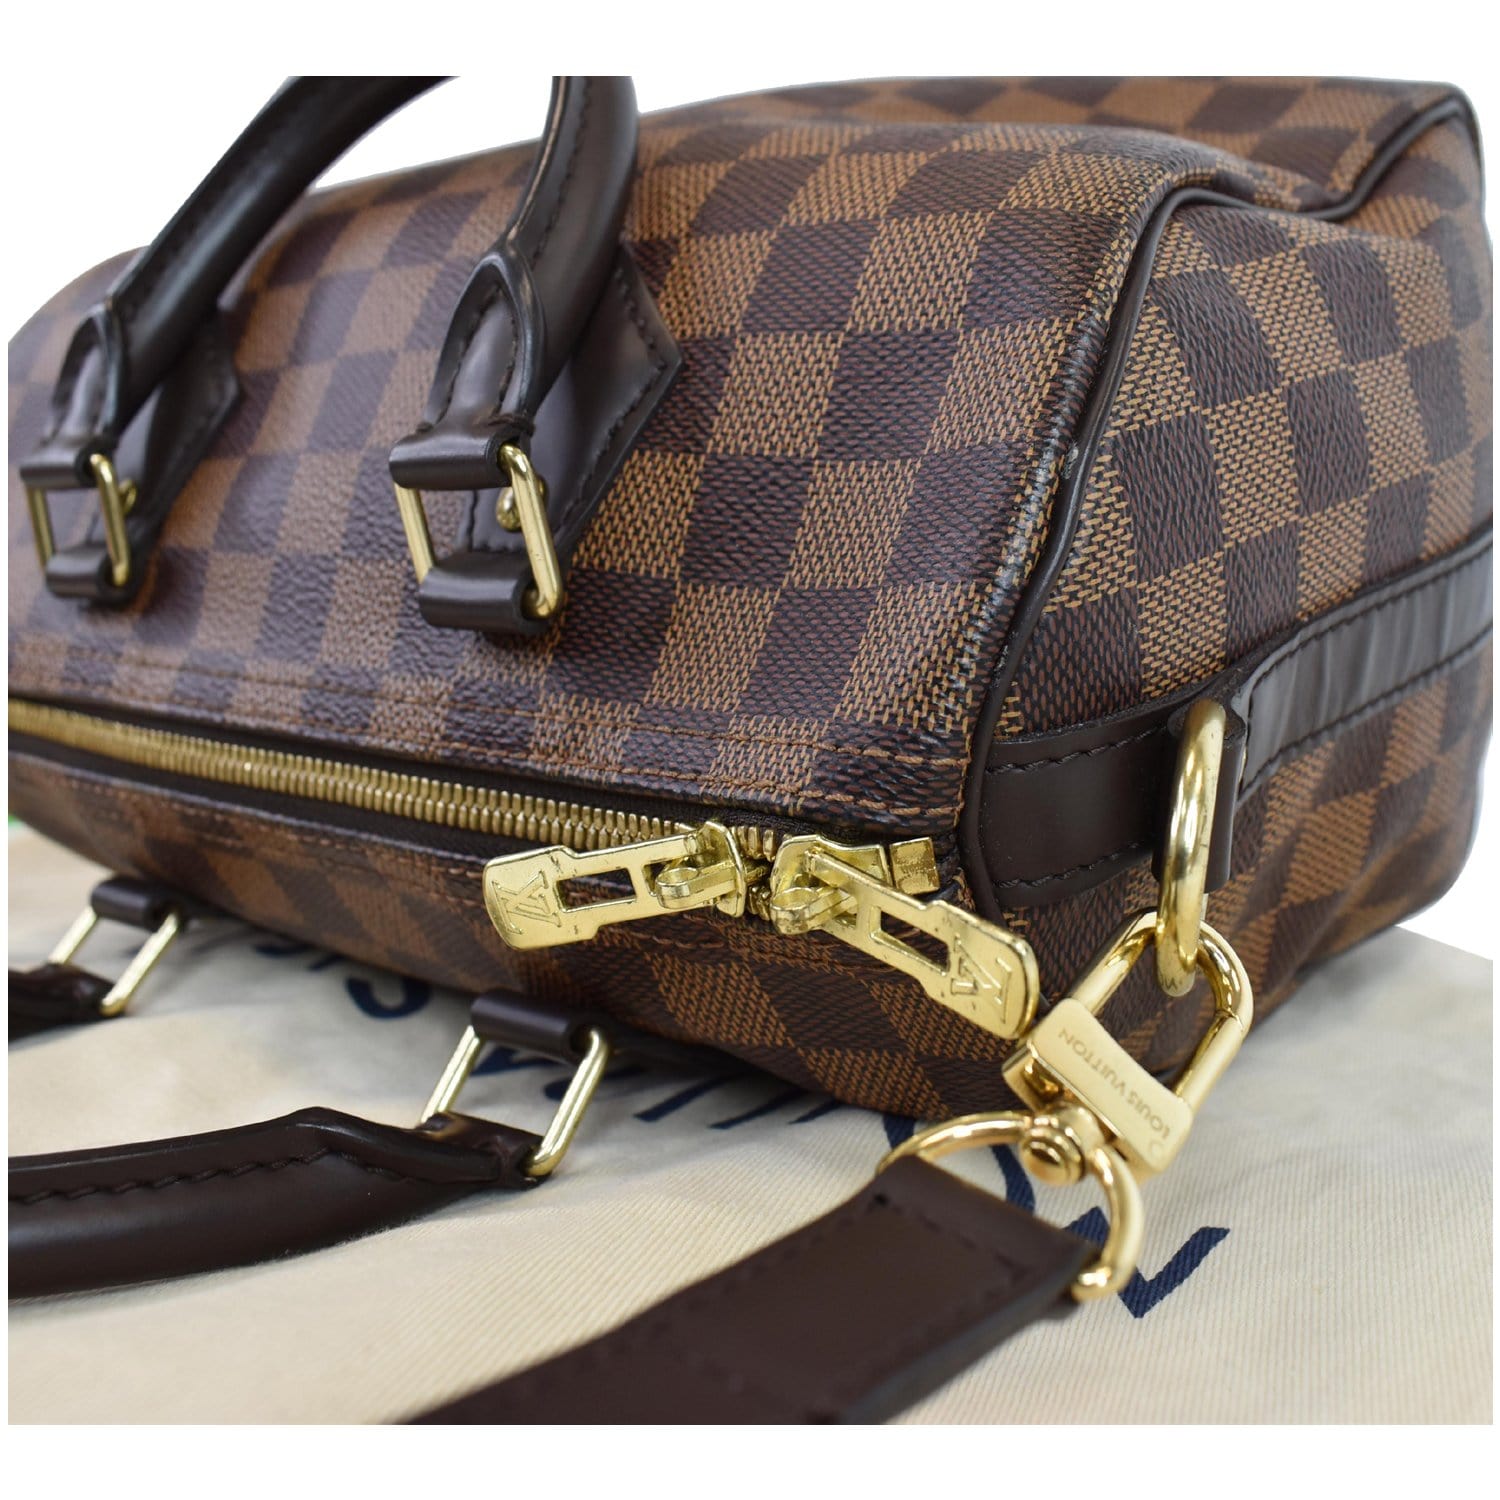 Speedy bandoulière cloth handbag Louis Vuitton Brown in Cloth - 31911483